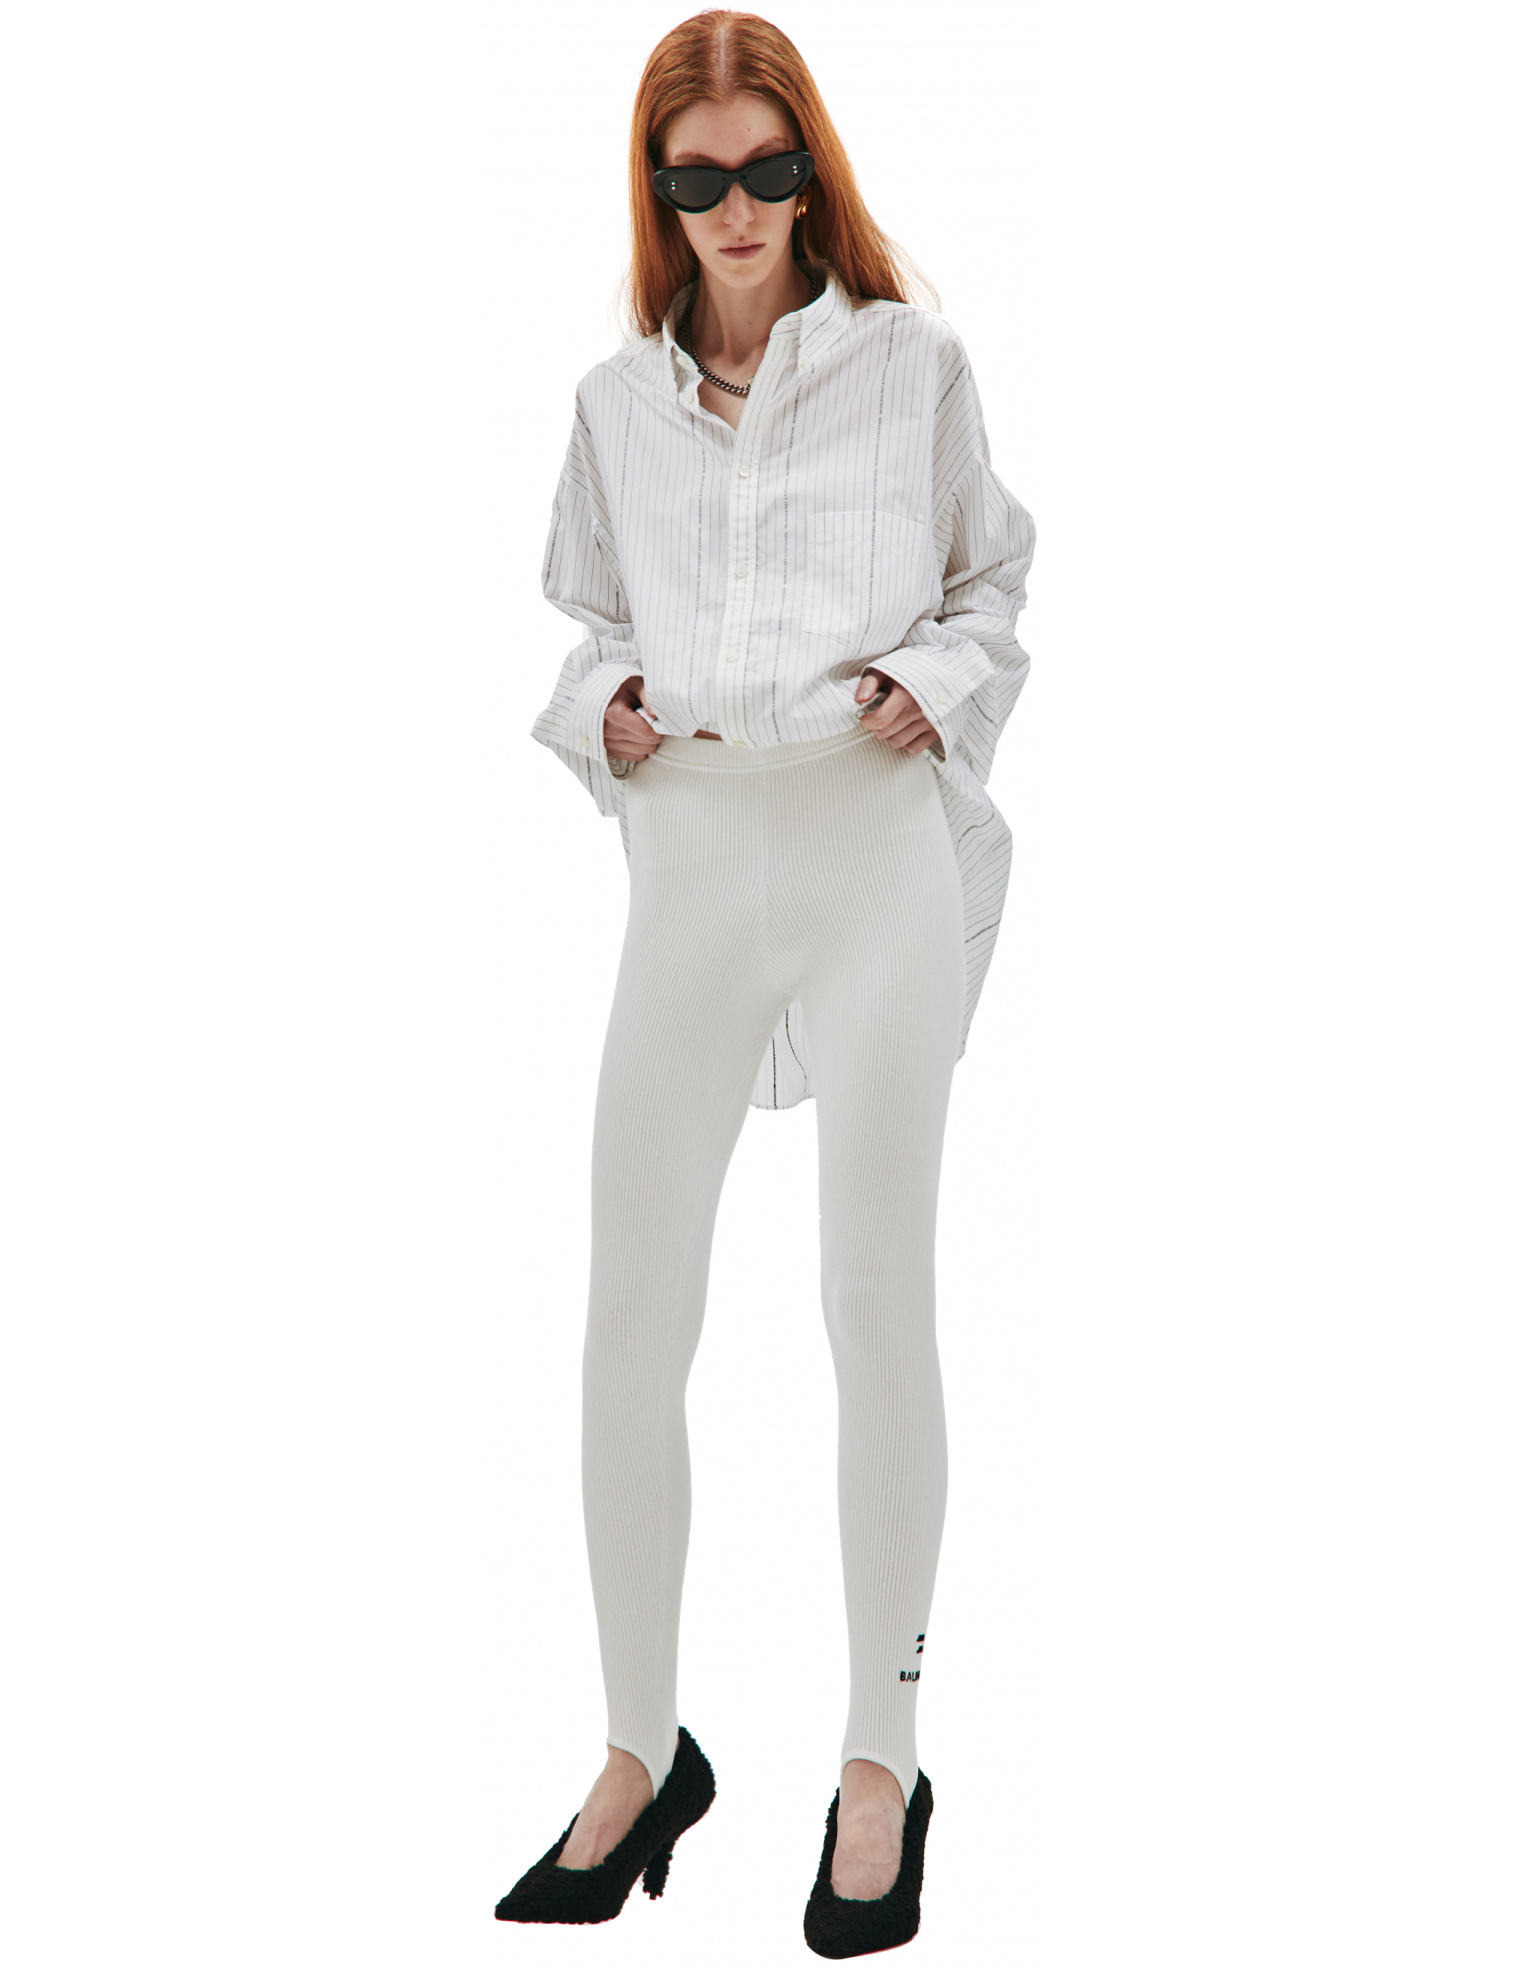 Balenciaga Leggings in white with loops